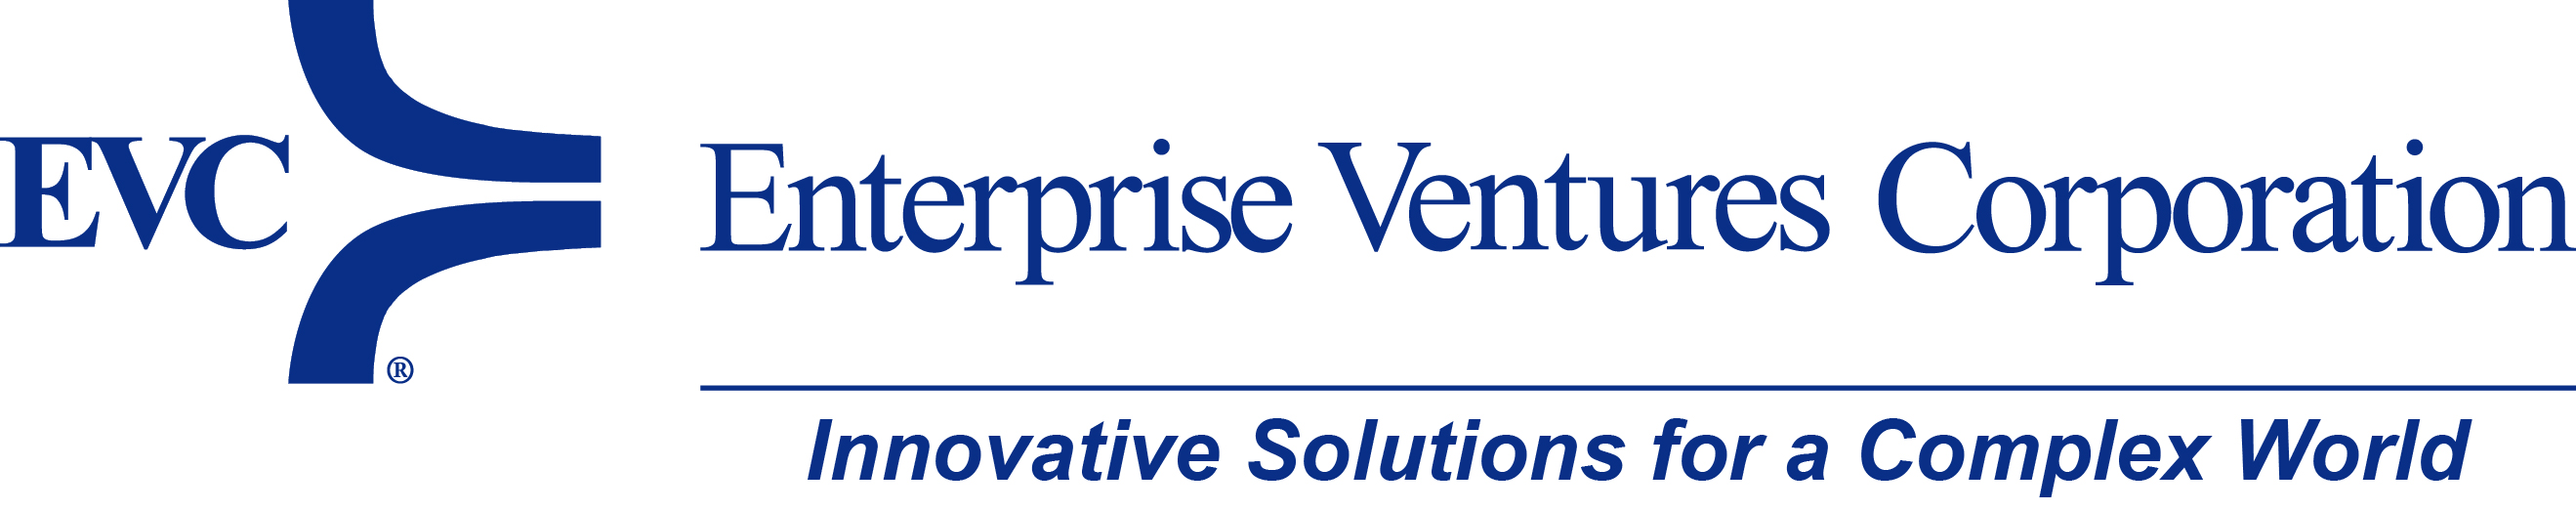 Venture corporation